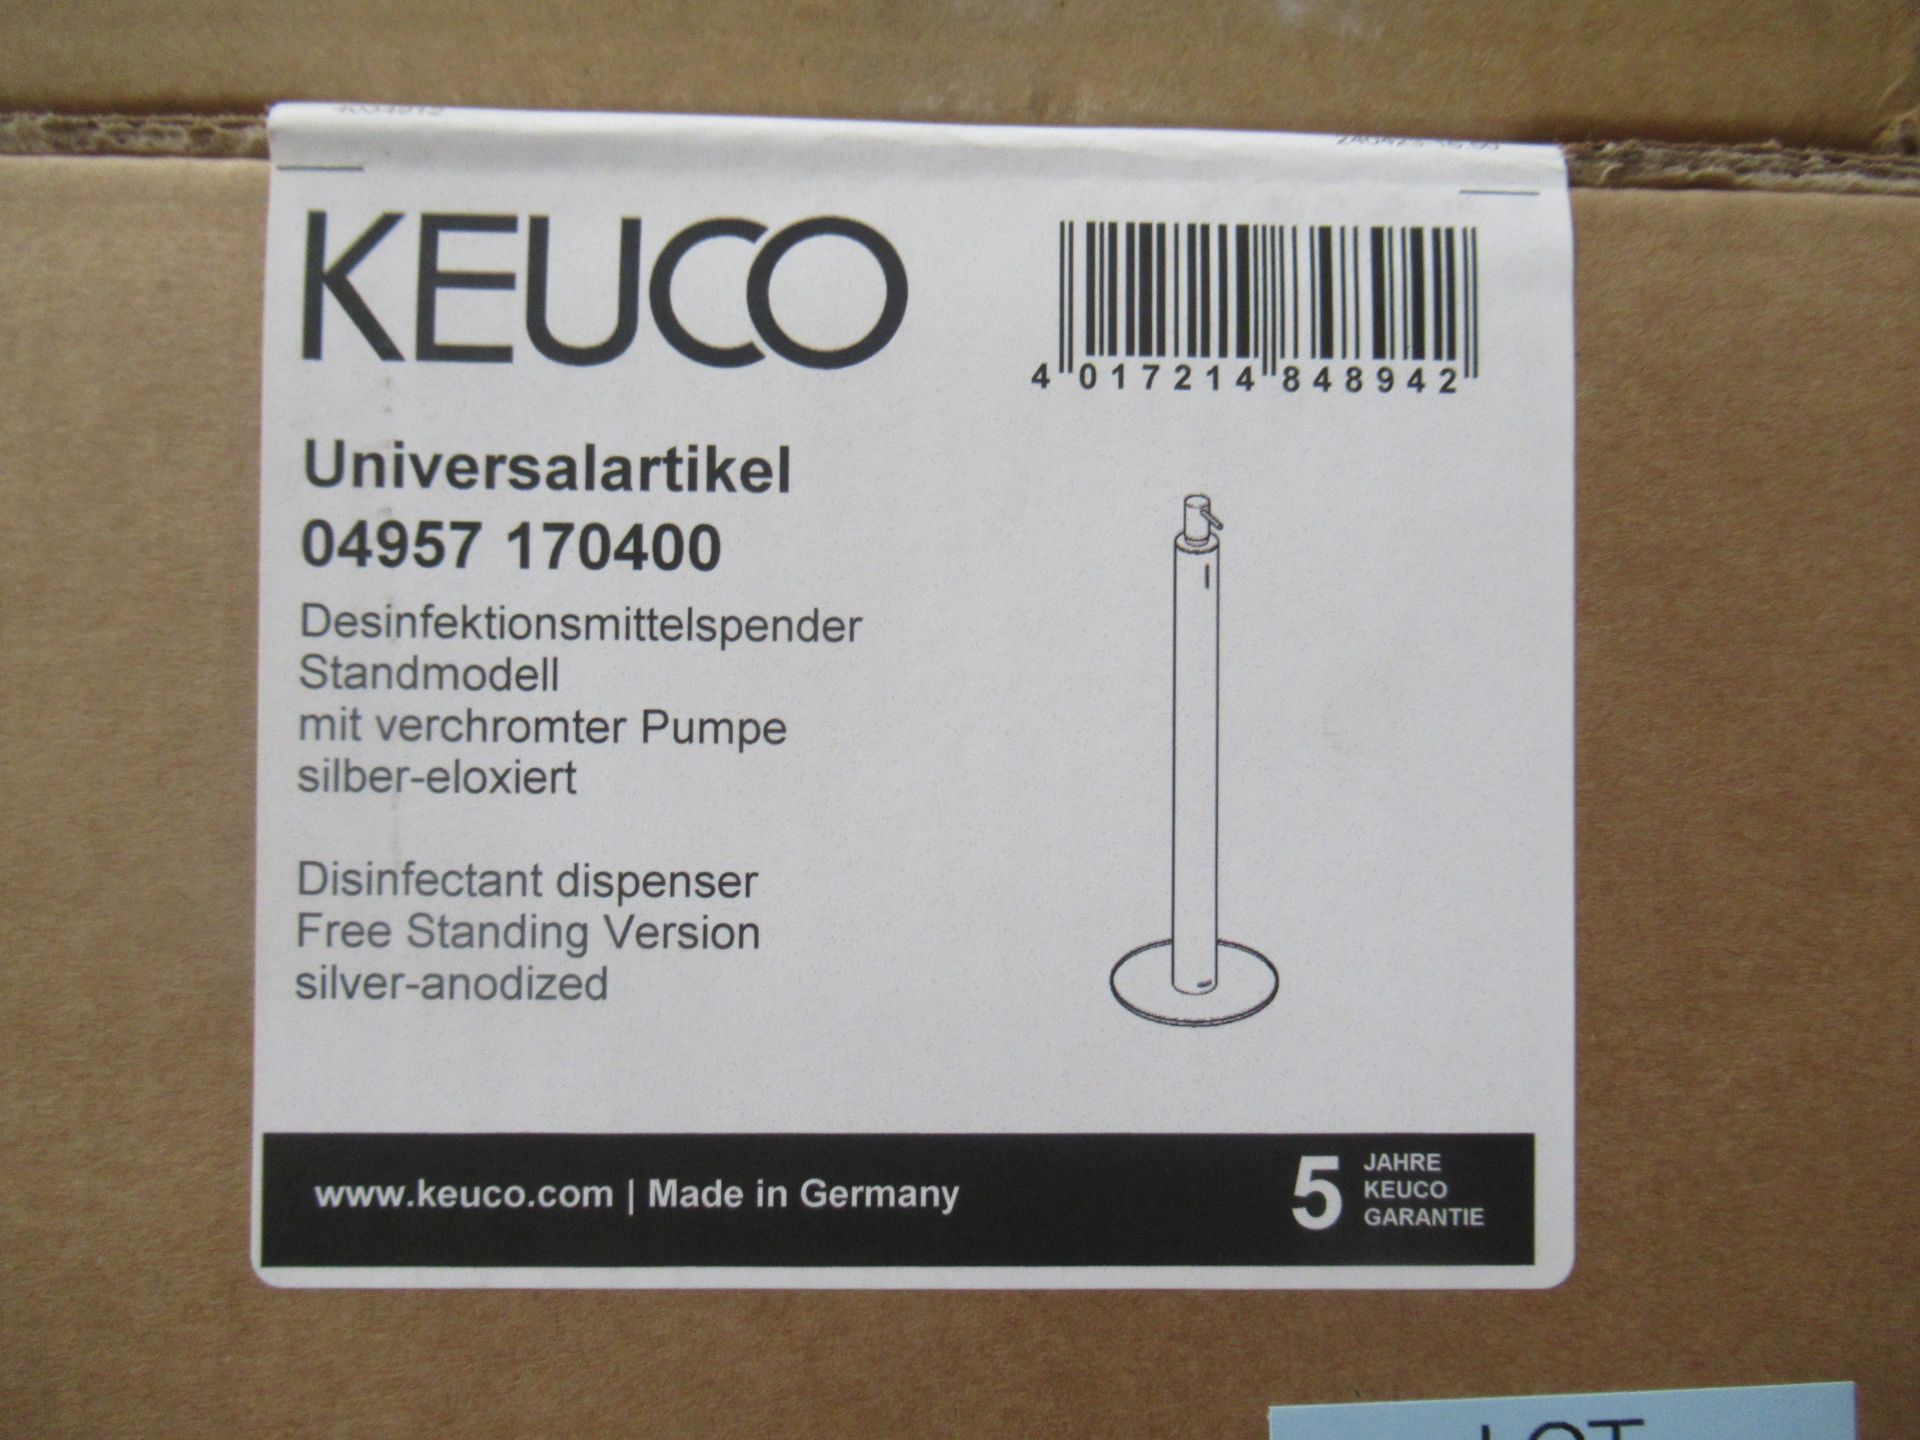 4 x Keuco Disinfectant Dispensers - Image 2 of 5